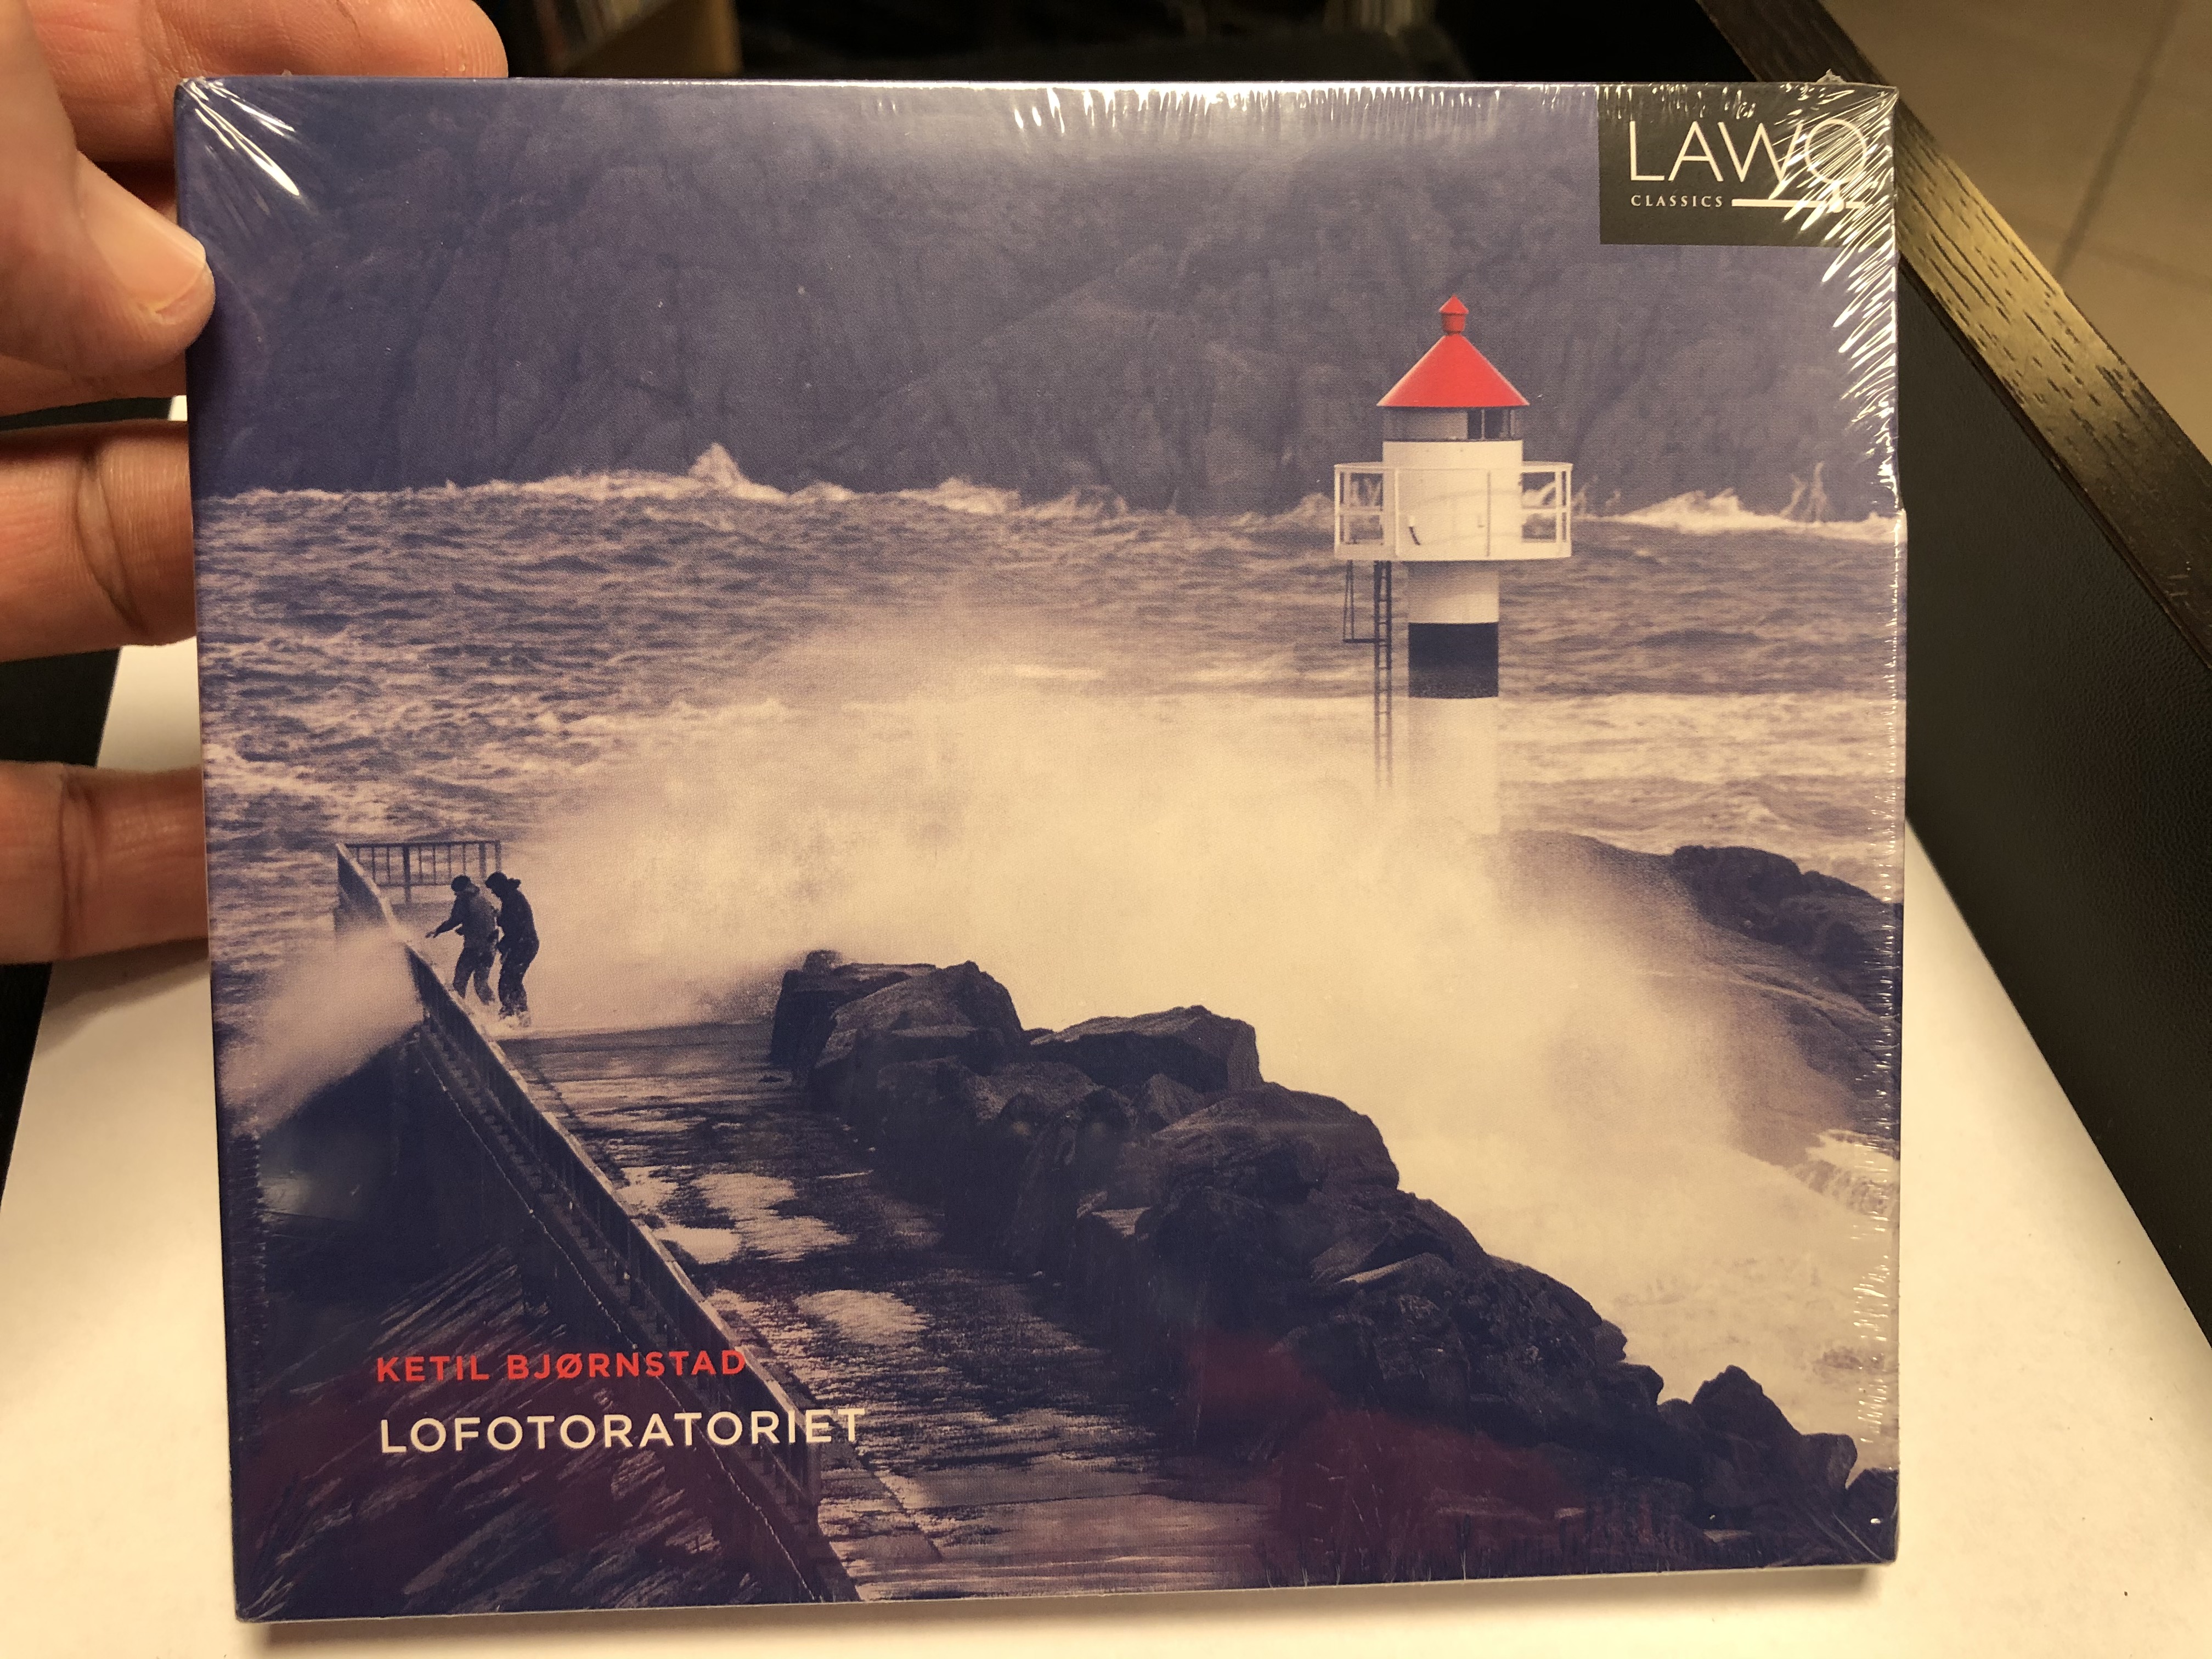 ketil-bj-rnstad-lofotoratoriet-lawo-classics-audio-cd-2020-stereo-lwc1202-1-.jpg